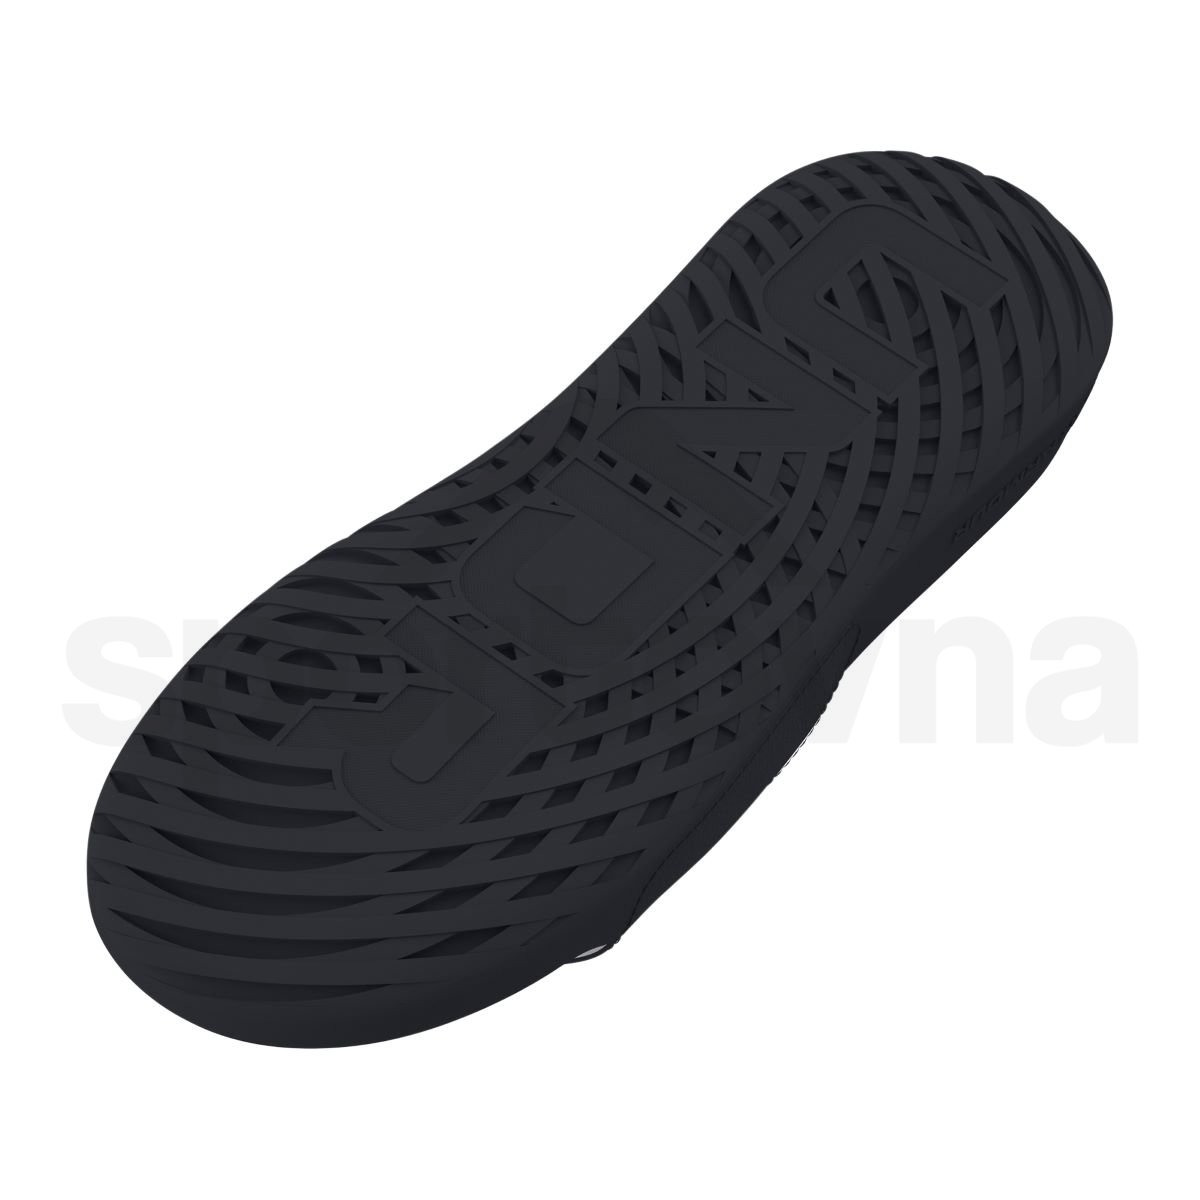 Pantofle Under Armour Ignite Select M - černá/bílá